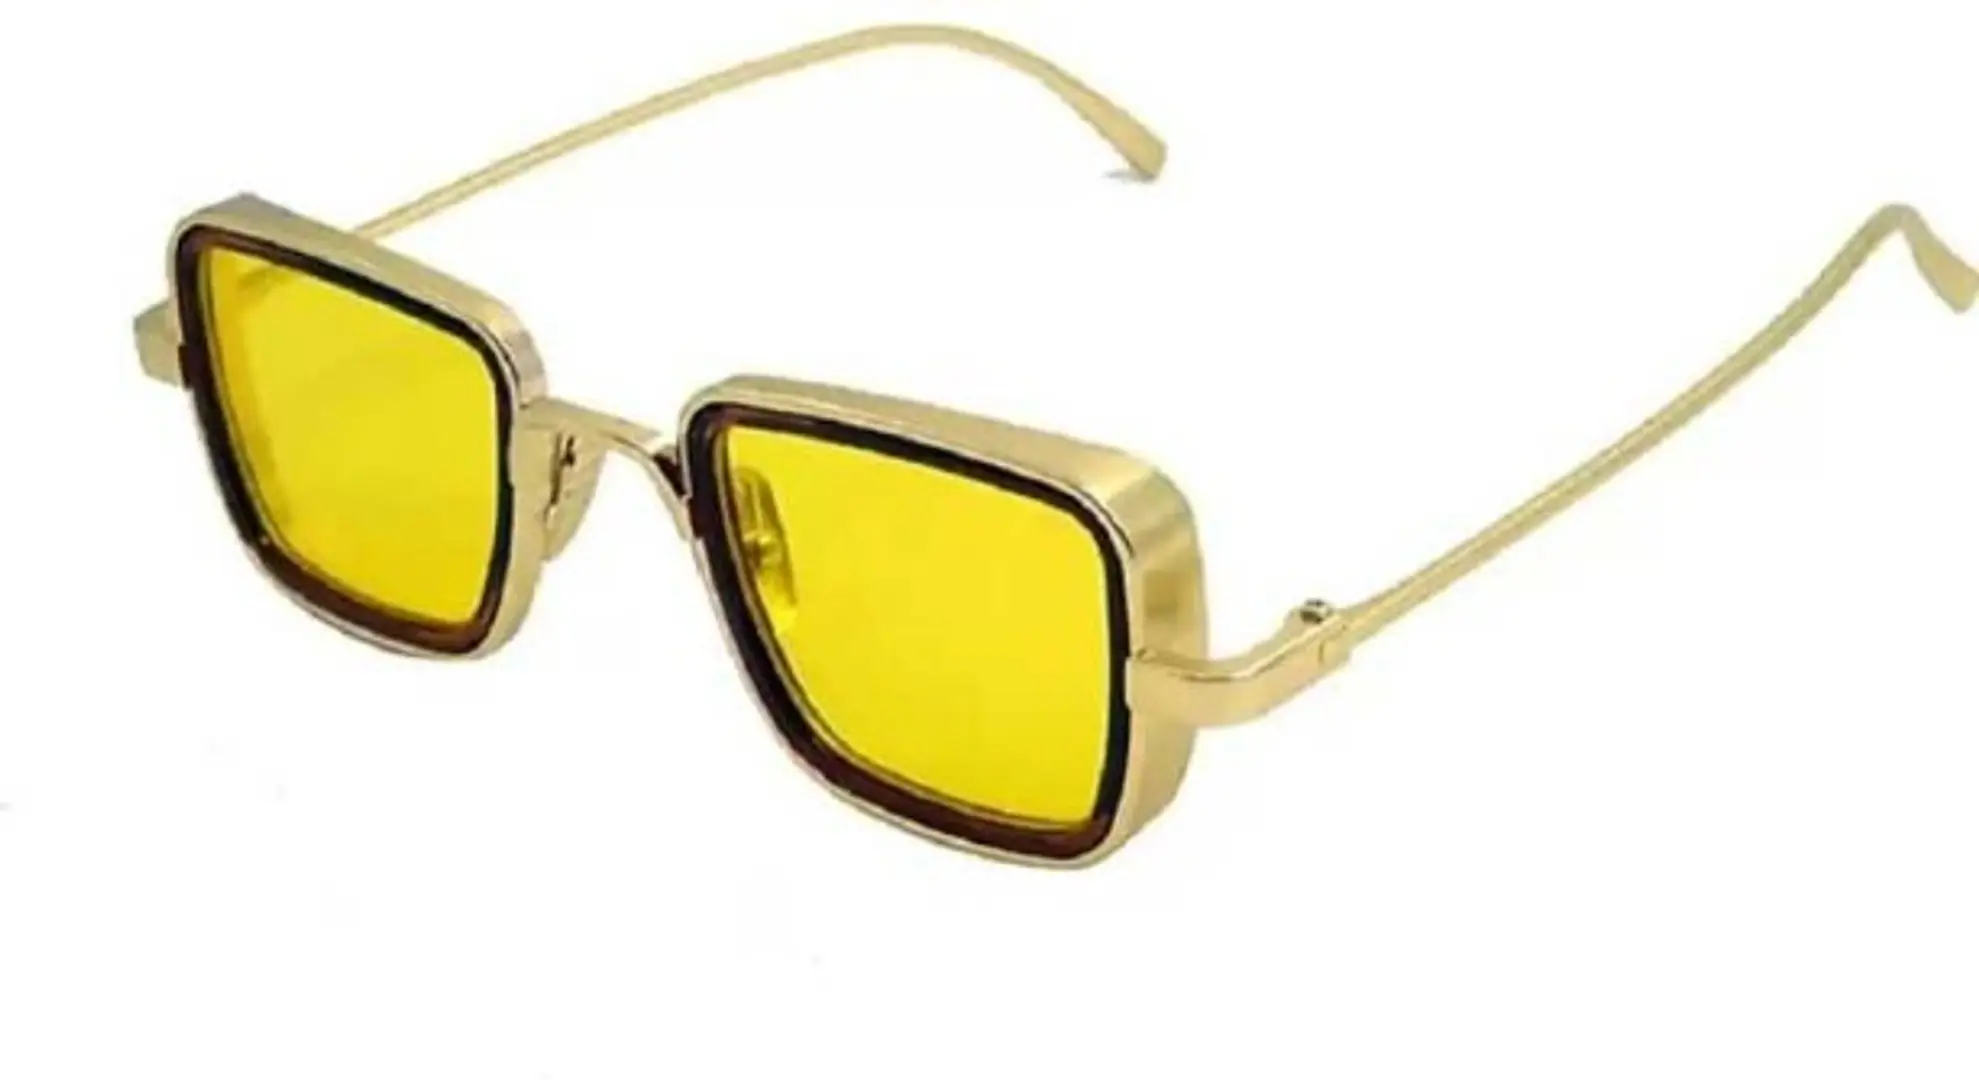 Top more than 195 kabir singh sunglasses black best